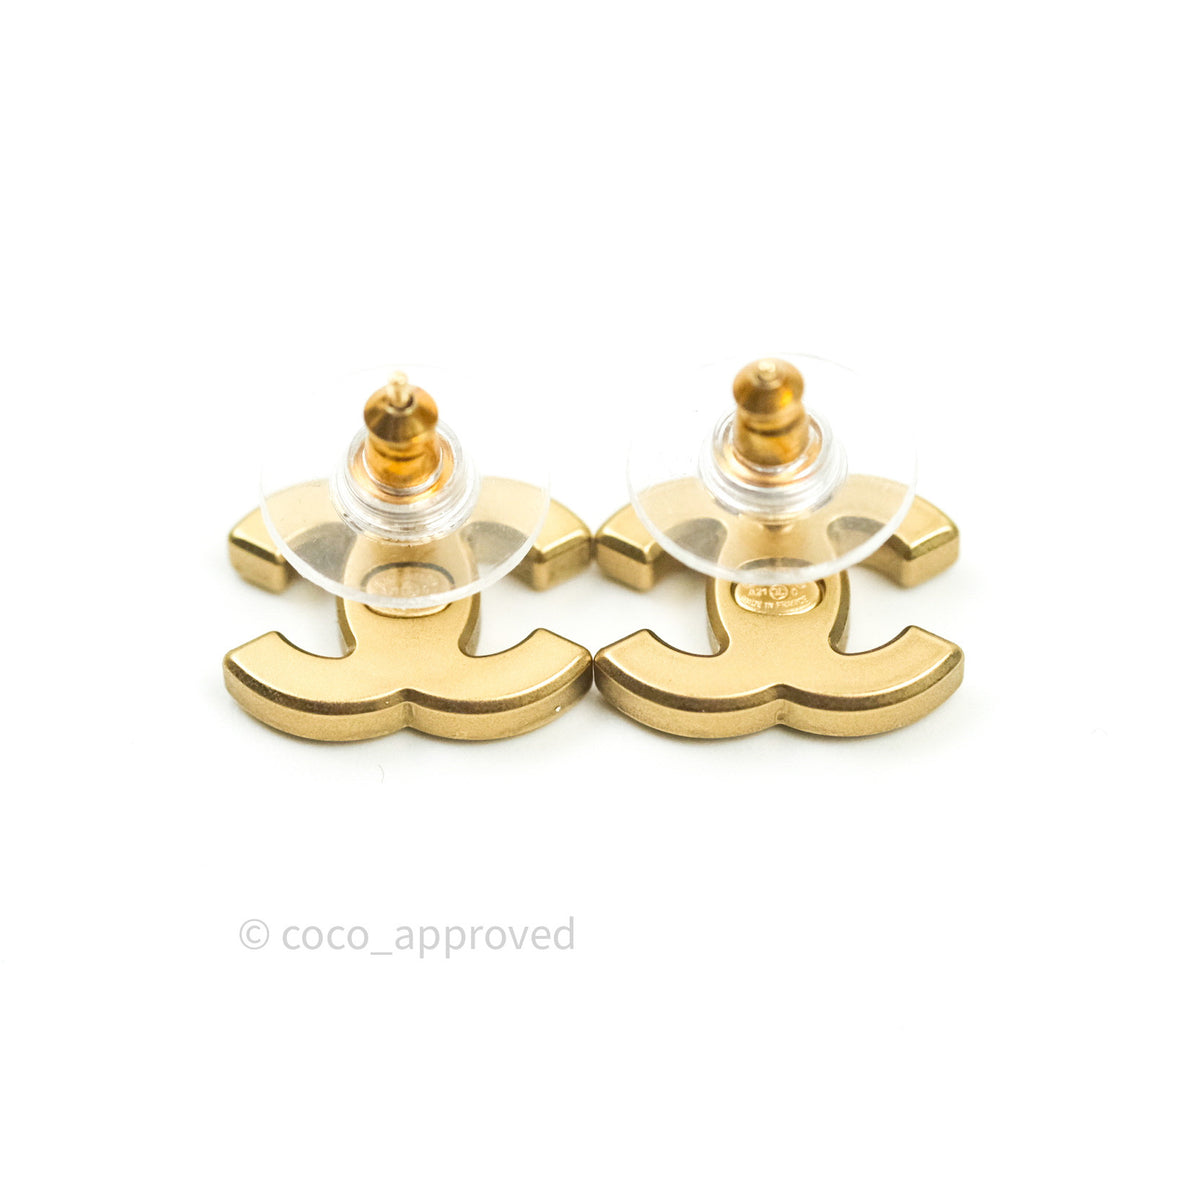 Chanel Crystal CC Earrings Gold Tone 21C